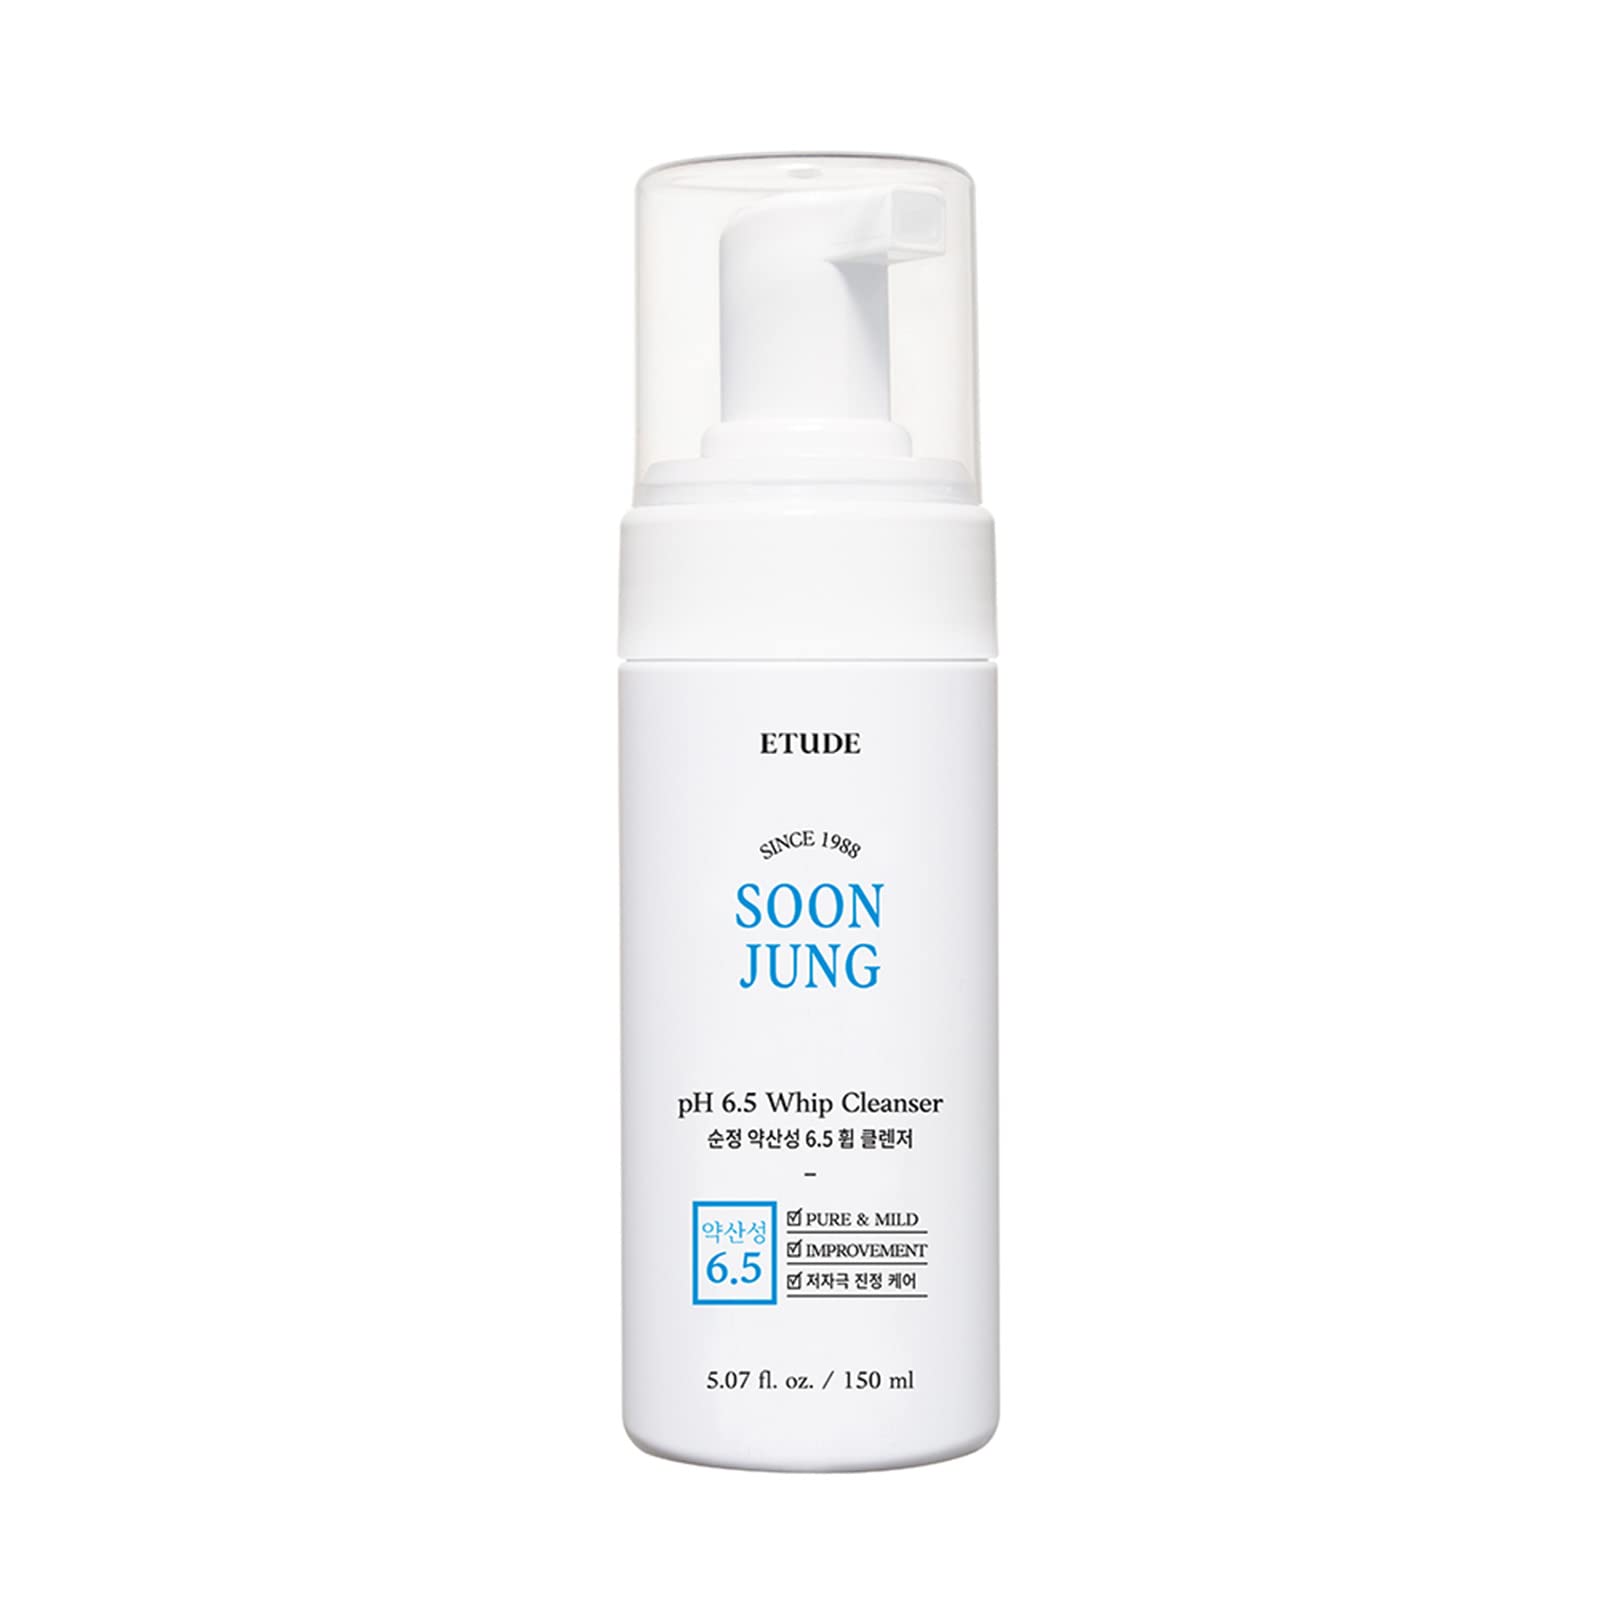 Etude Soon Jung pH 6.5 Whip Cleanser